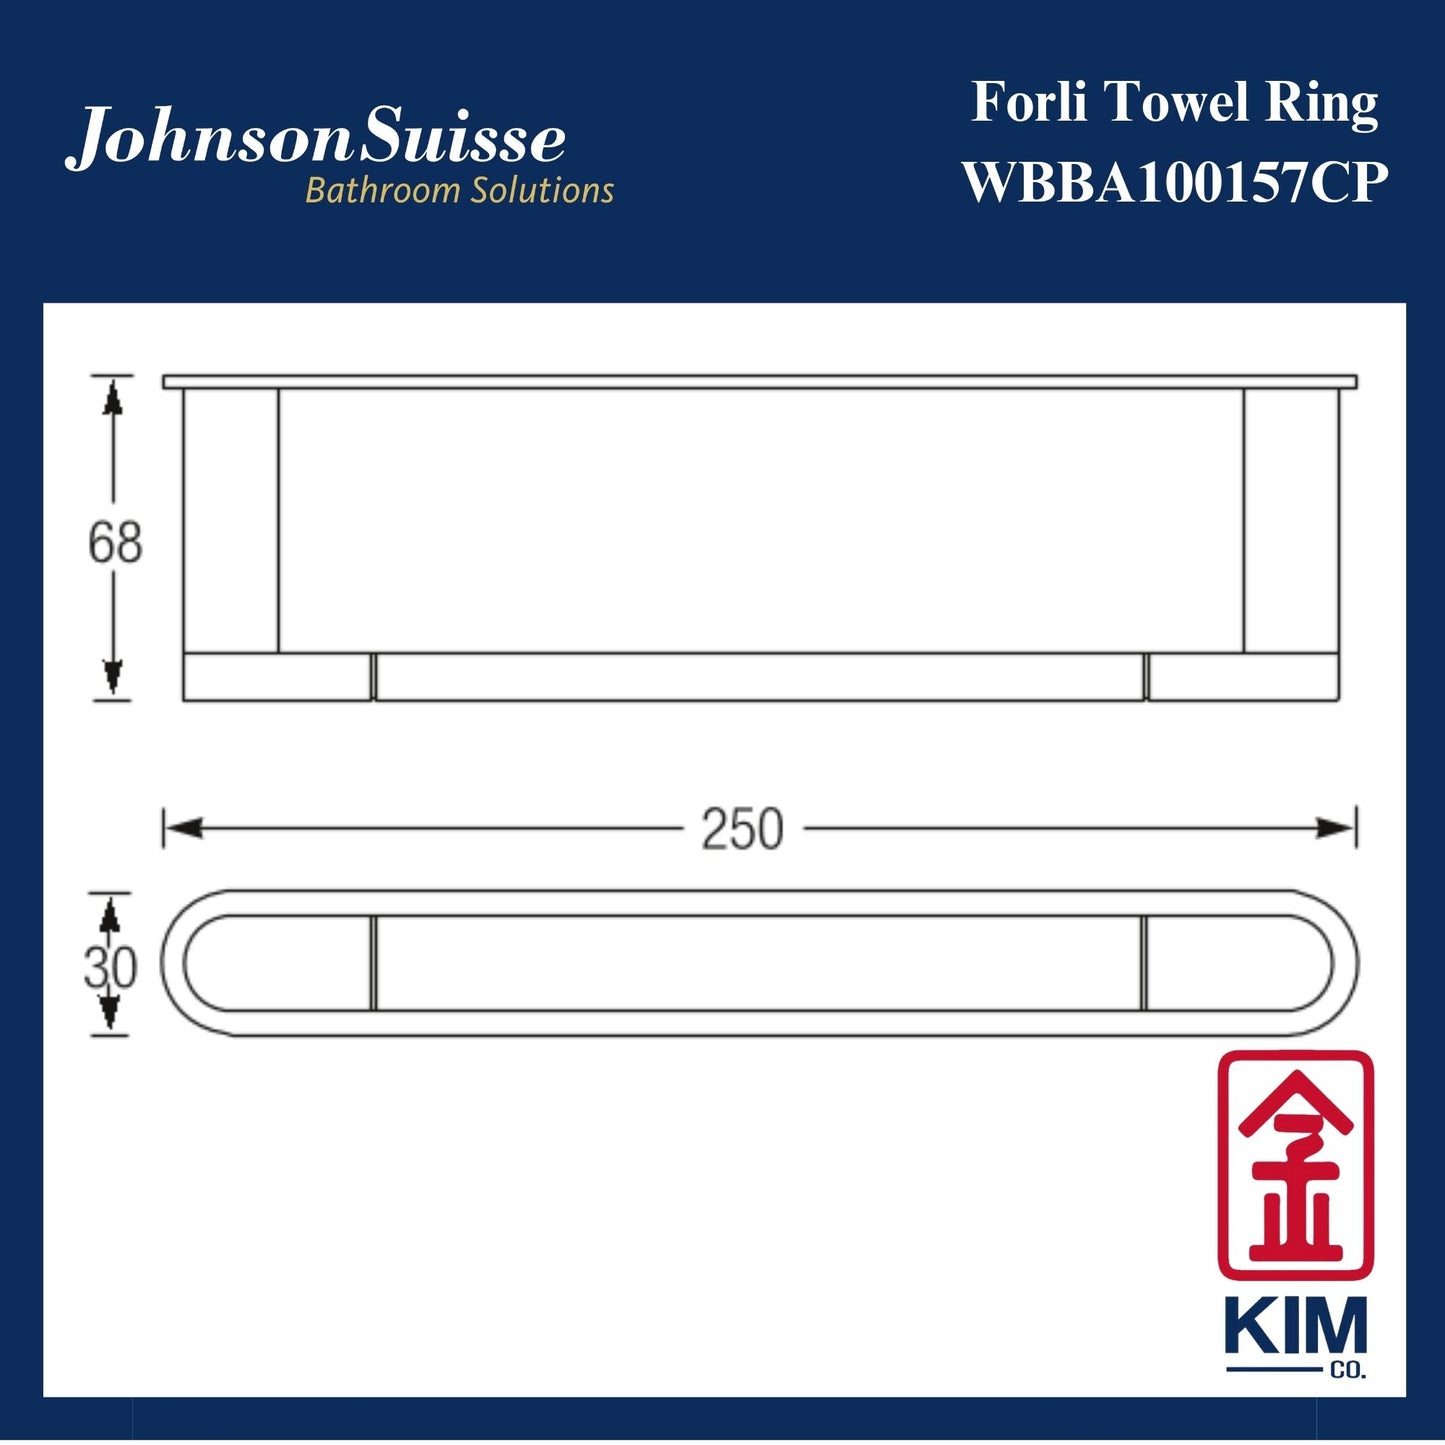 Johnson Suisse Forli Towel Ring (WBBA100157CP)